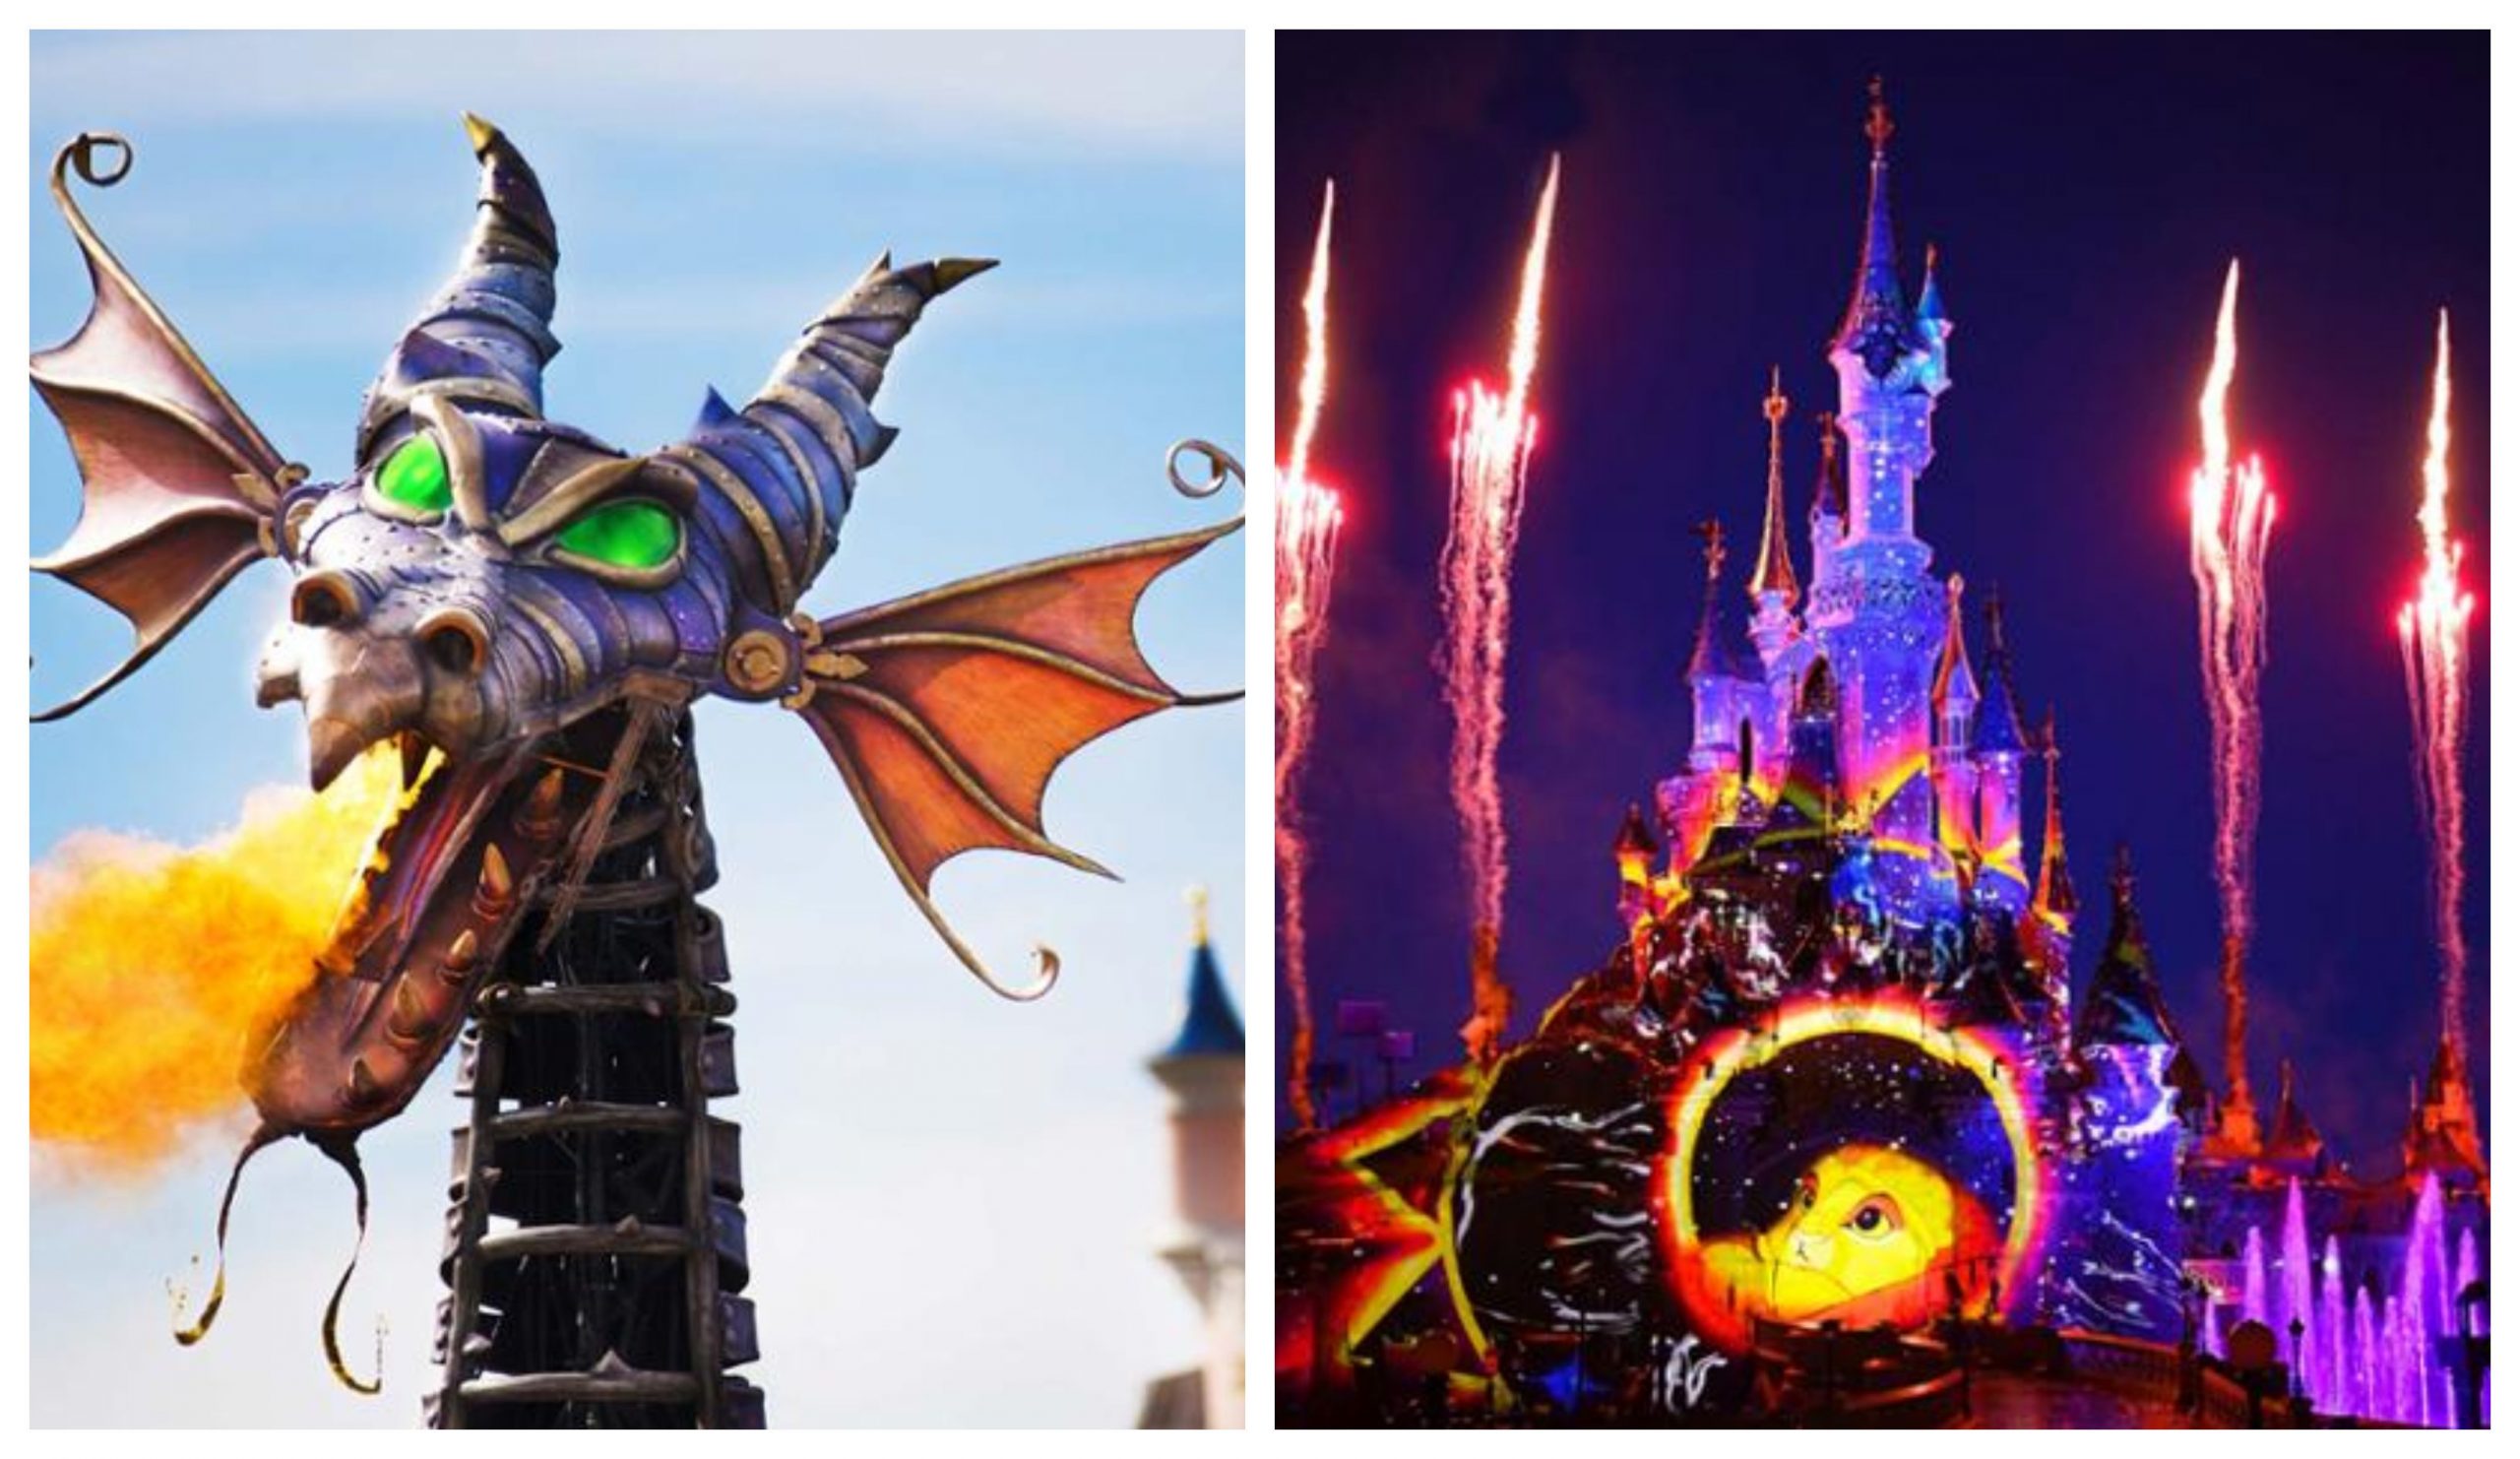 Disneyland Paris Streaming Shows and Parades Online!